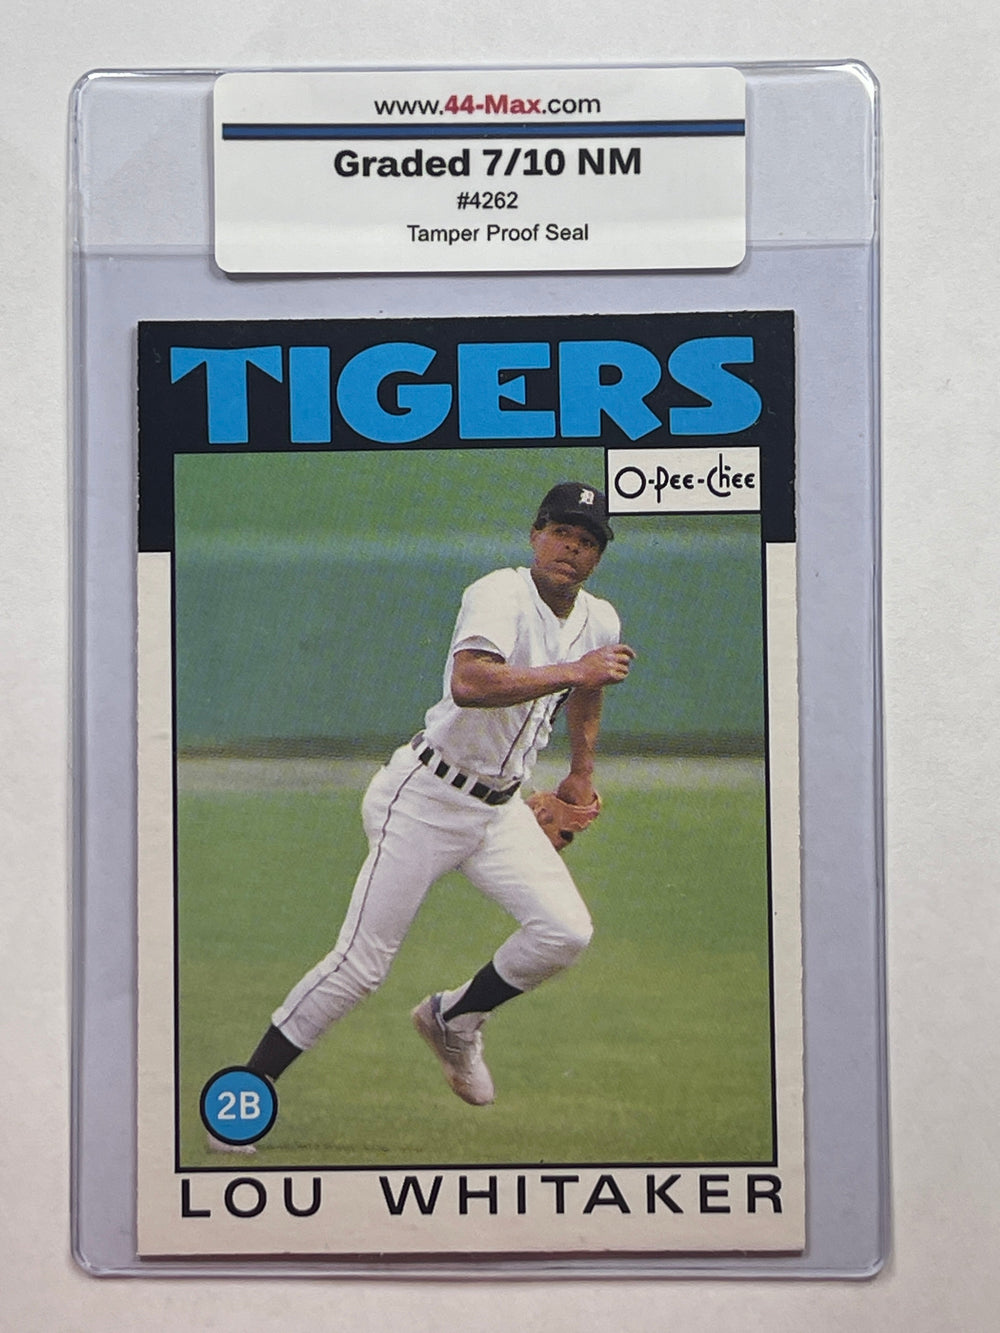 Lou Whitaker 1986 O-Pee-Chee Baseball Card. 44-Max 7/10 NM #4262